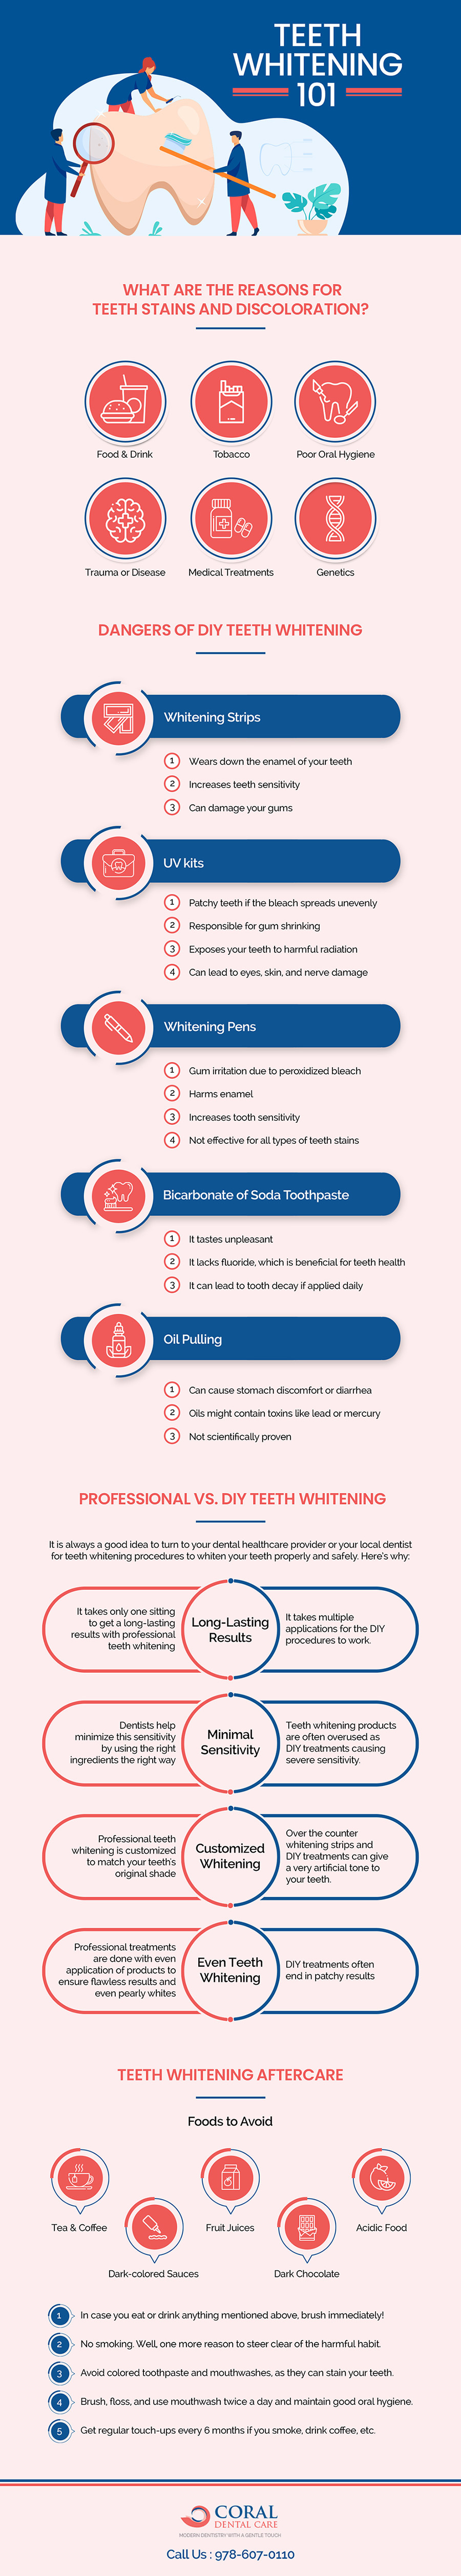 Teeth-whitening-101-infographic-plaza